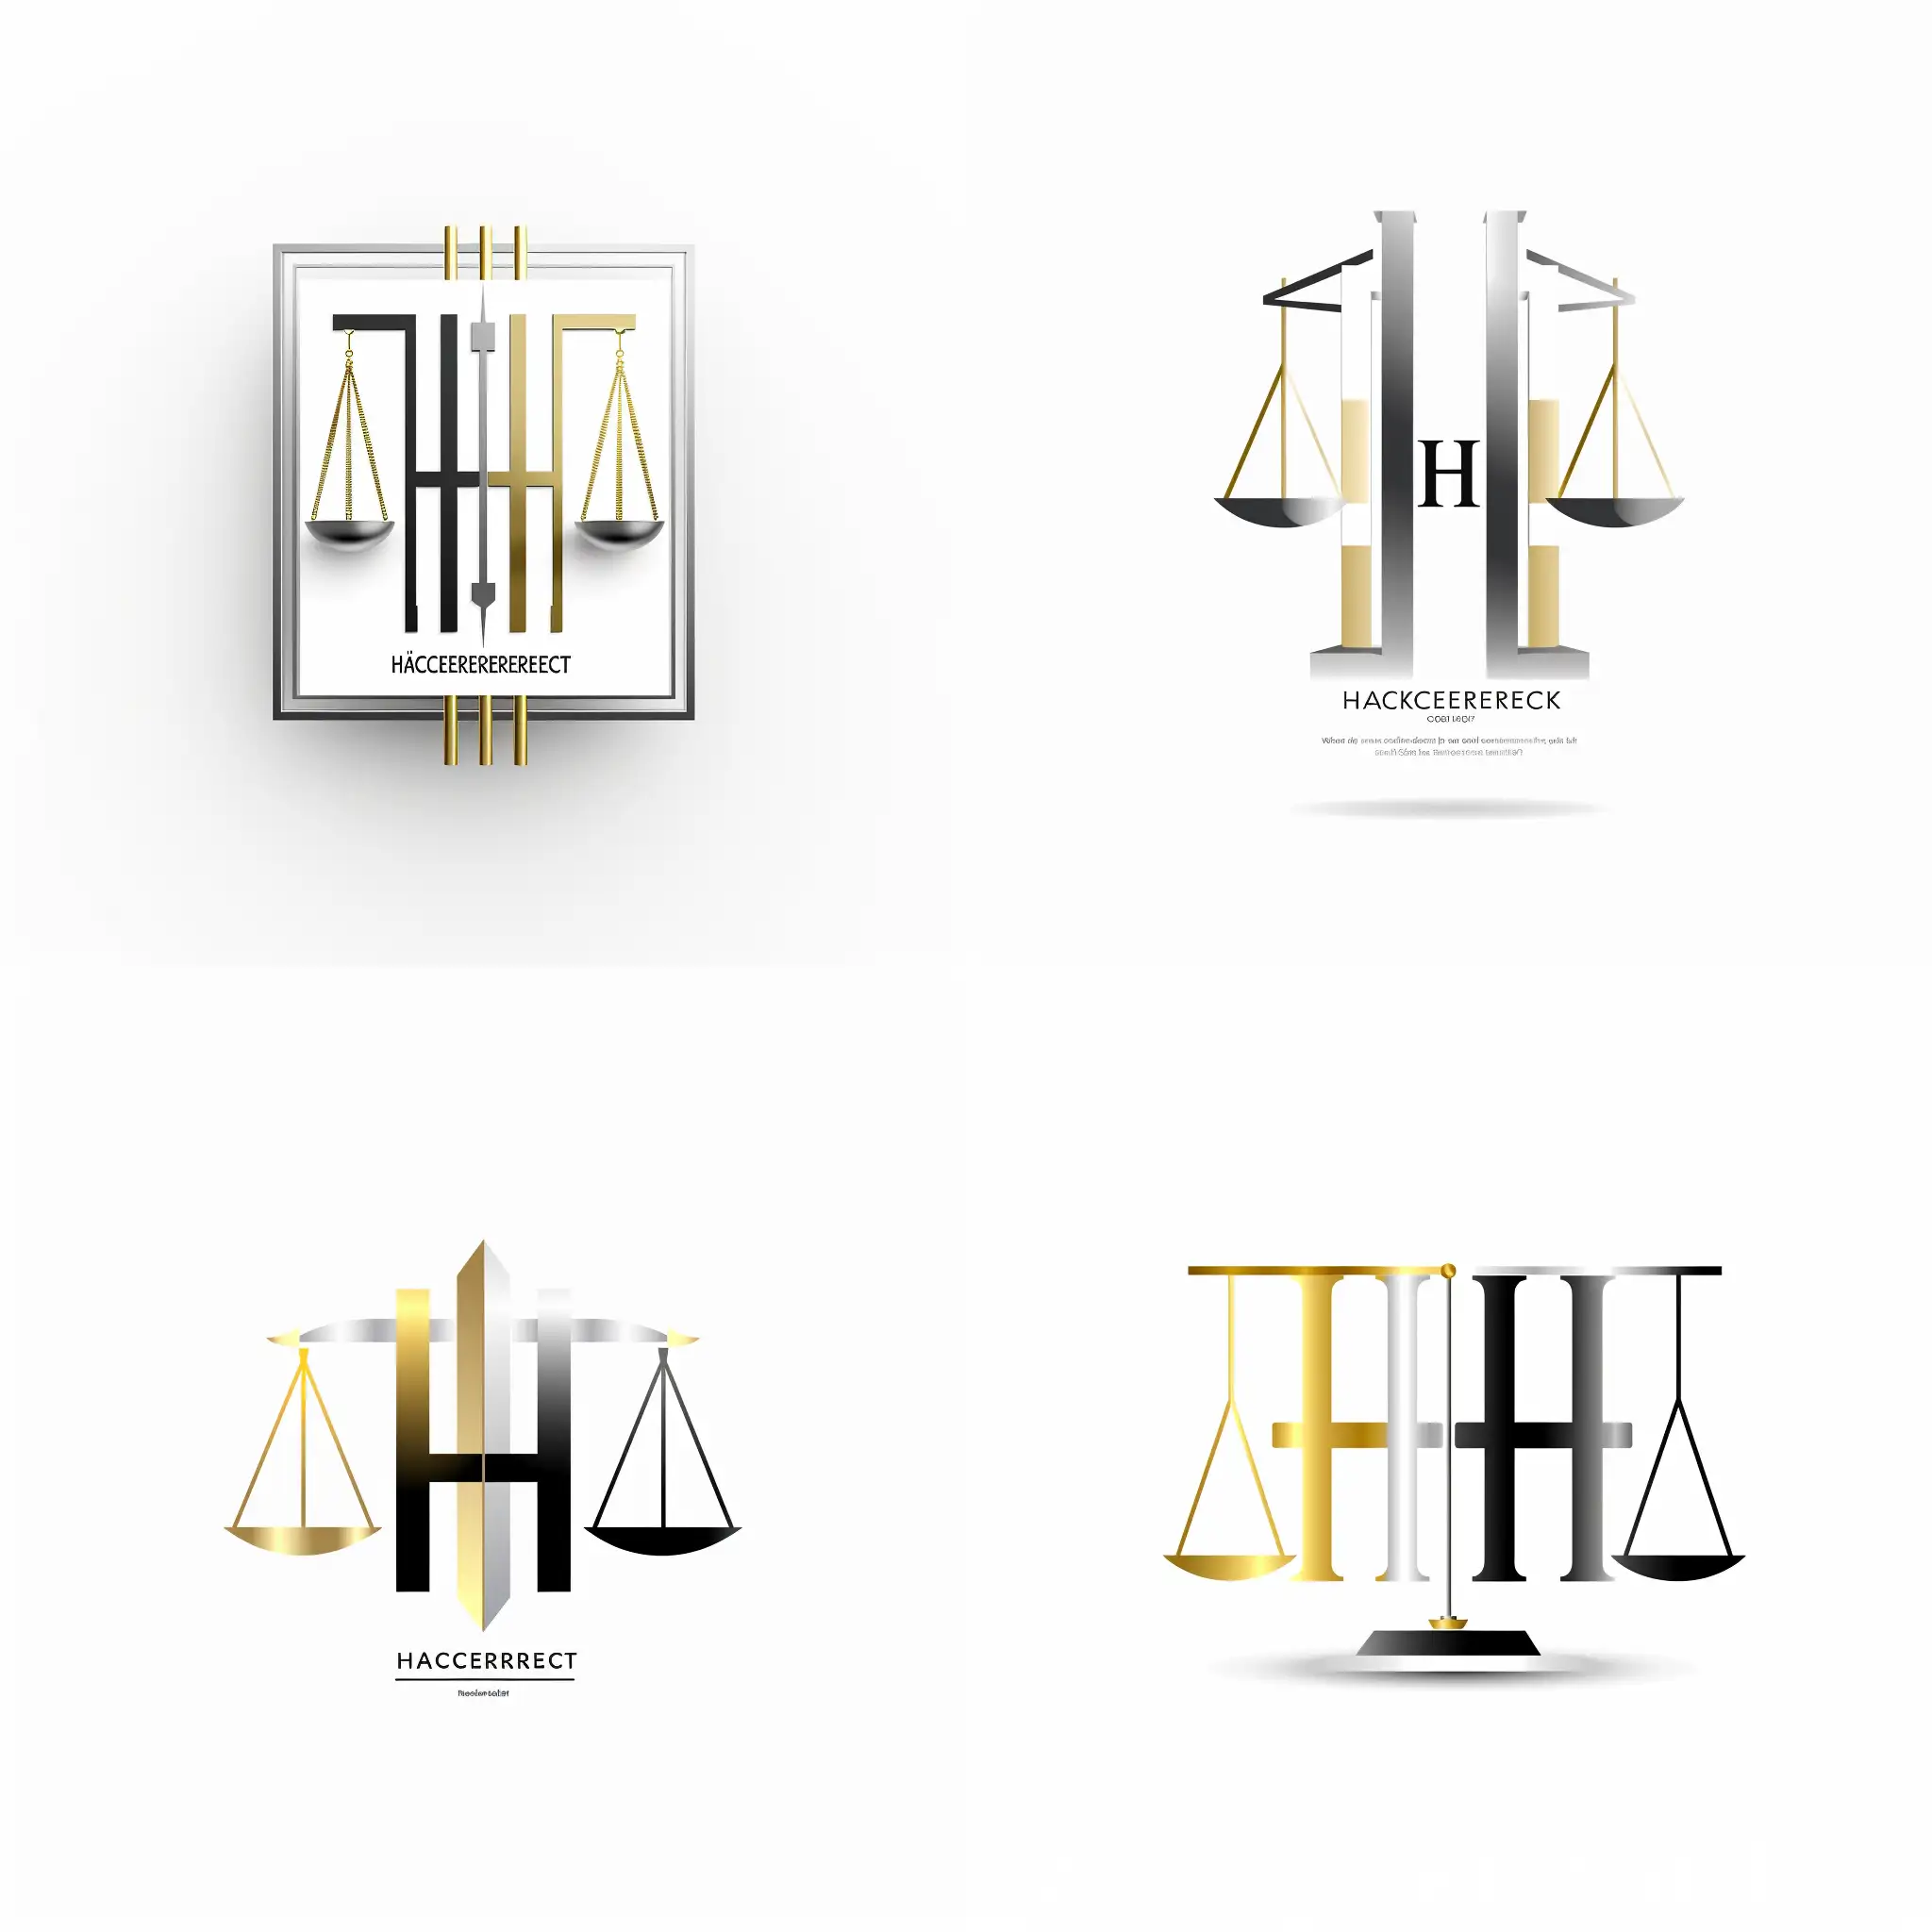 Sophisticated-Law-Firm-Logo-Design-Elegant-HACKERRECHT-Emblem-with-Golden-Silver-and-Black-Elements